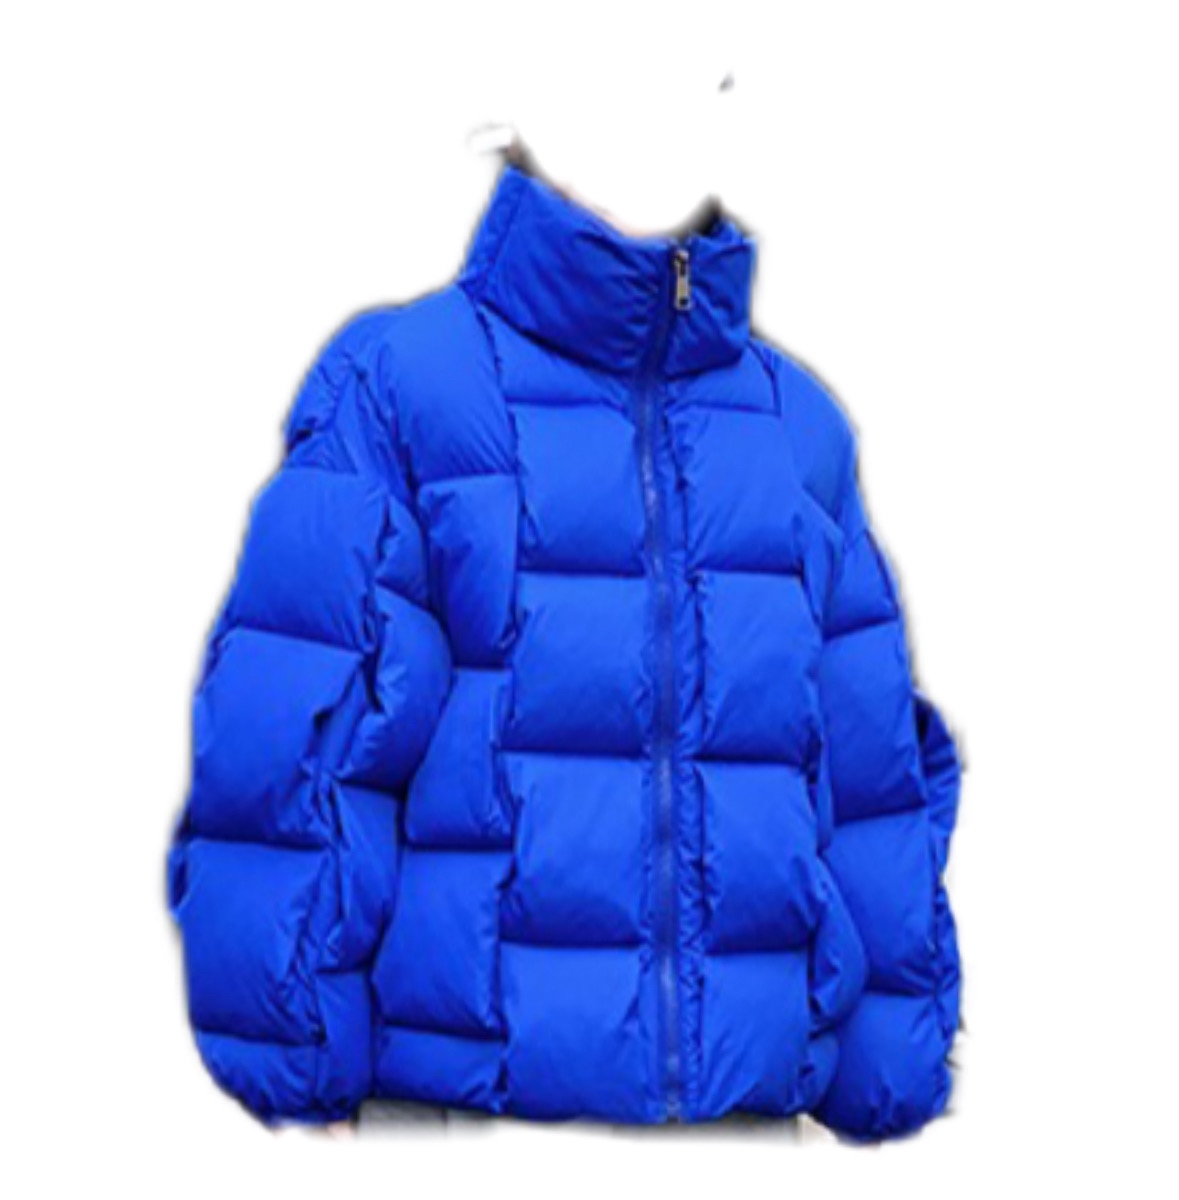 New look winter bubble puffer jacket